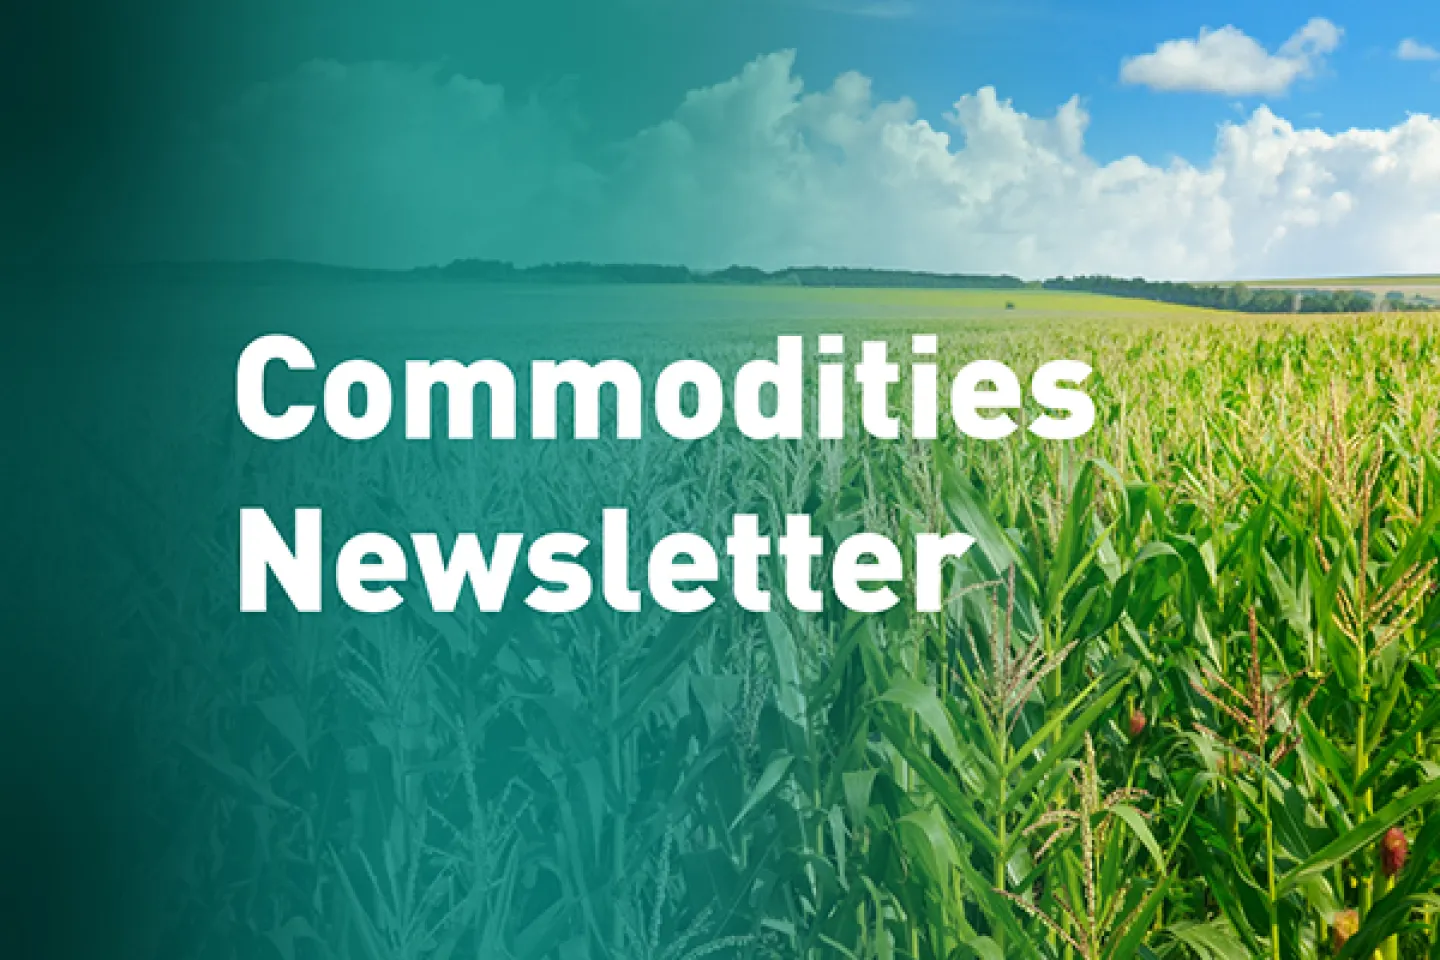 enx_commodities-newsletter_insights-thumbnails_corn_030523.jpg